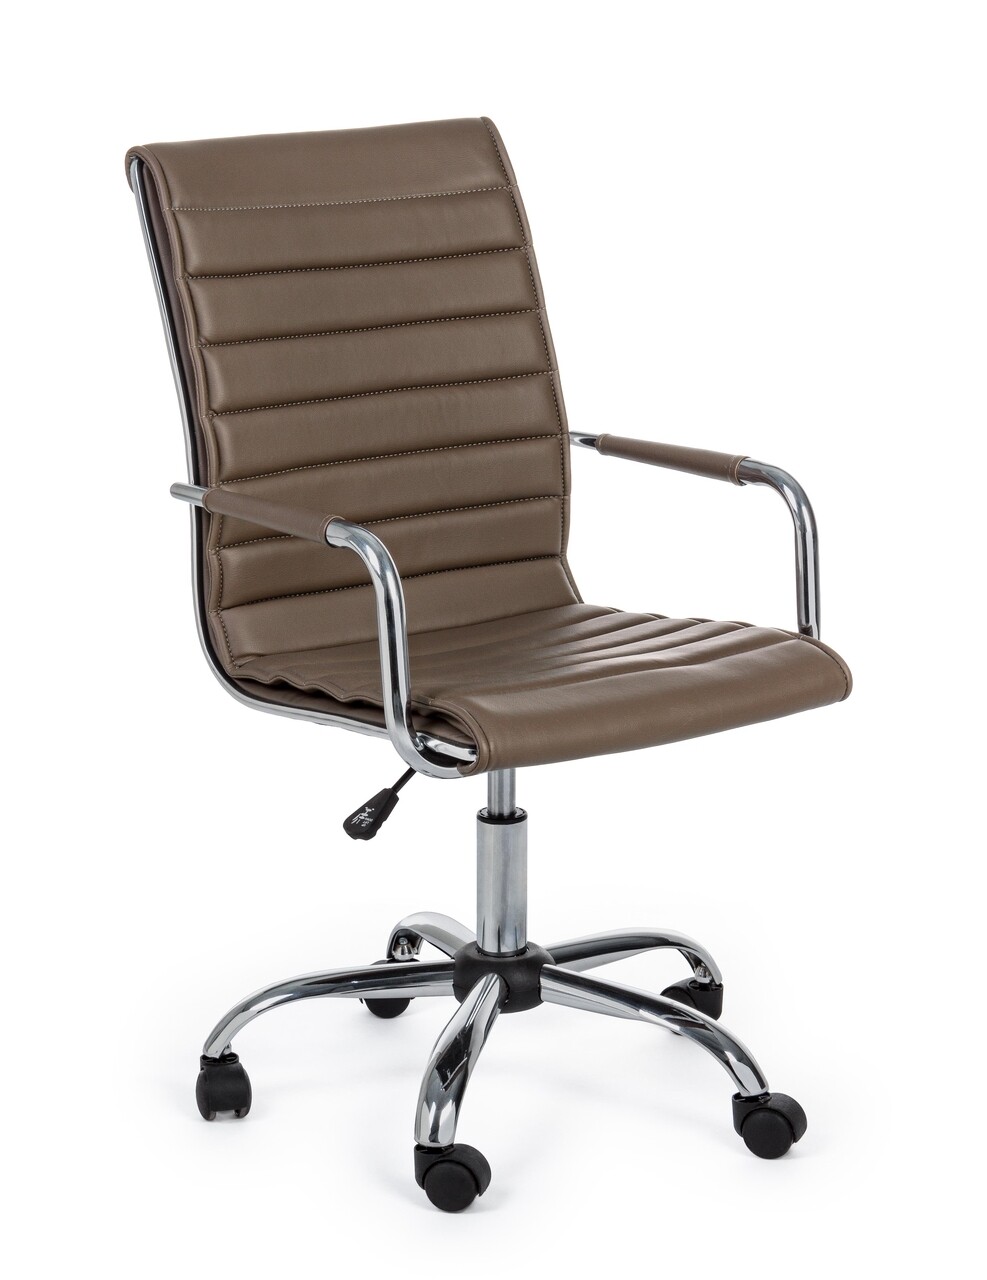 Perth Irodai szék, Bizzotto, öko-bőr, barna